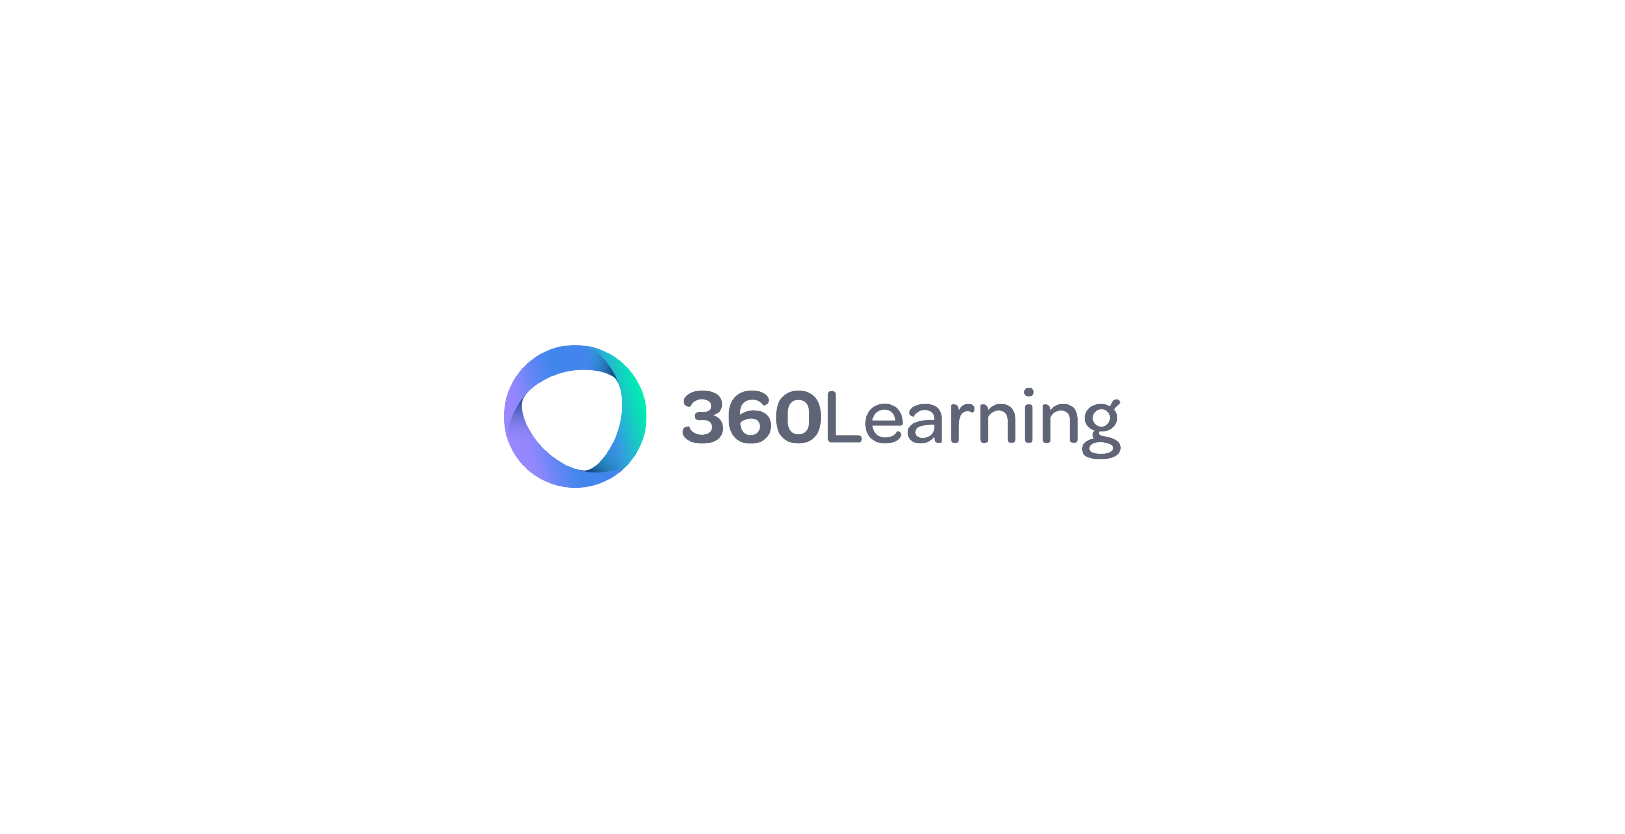 Vision Fund investment portfolio company 360Learning's logo